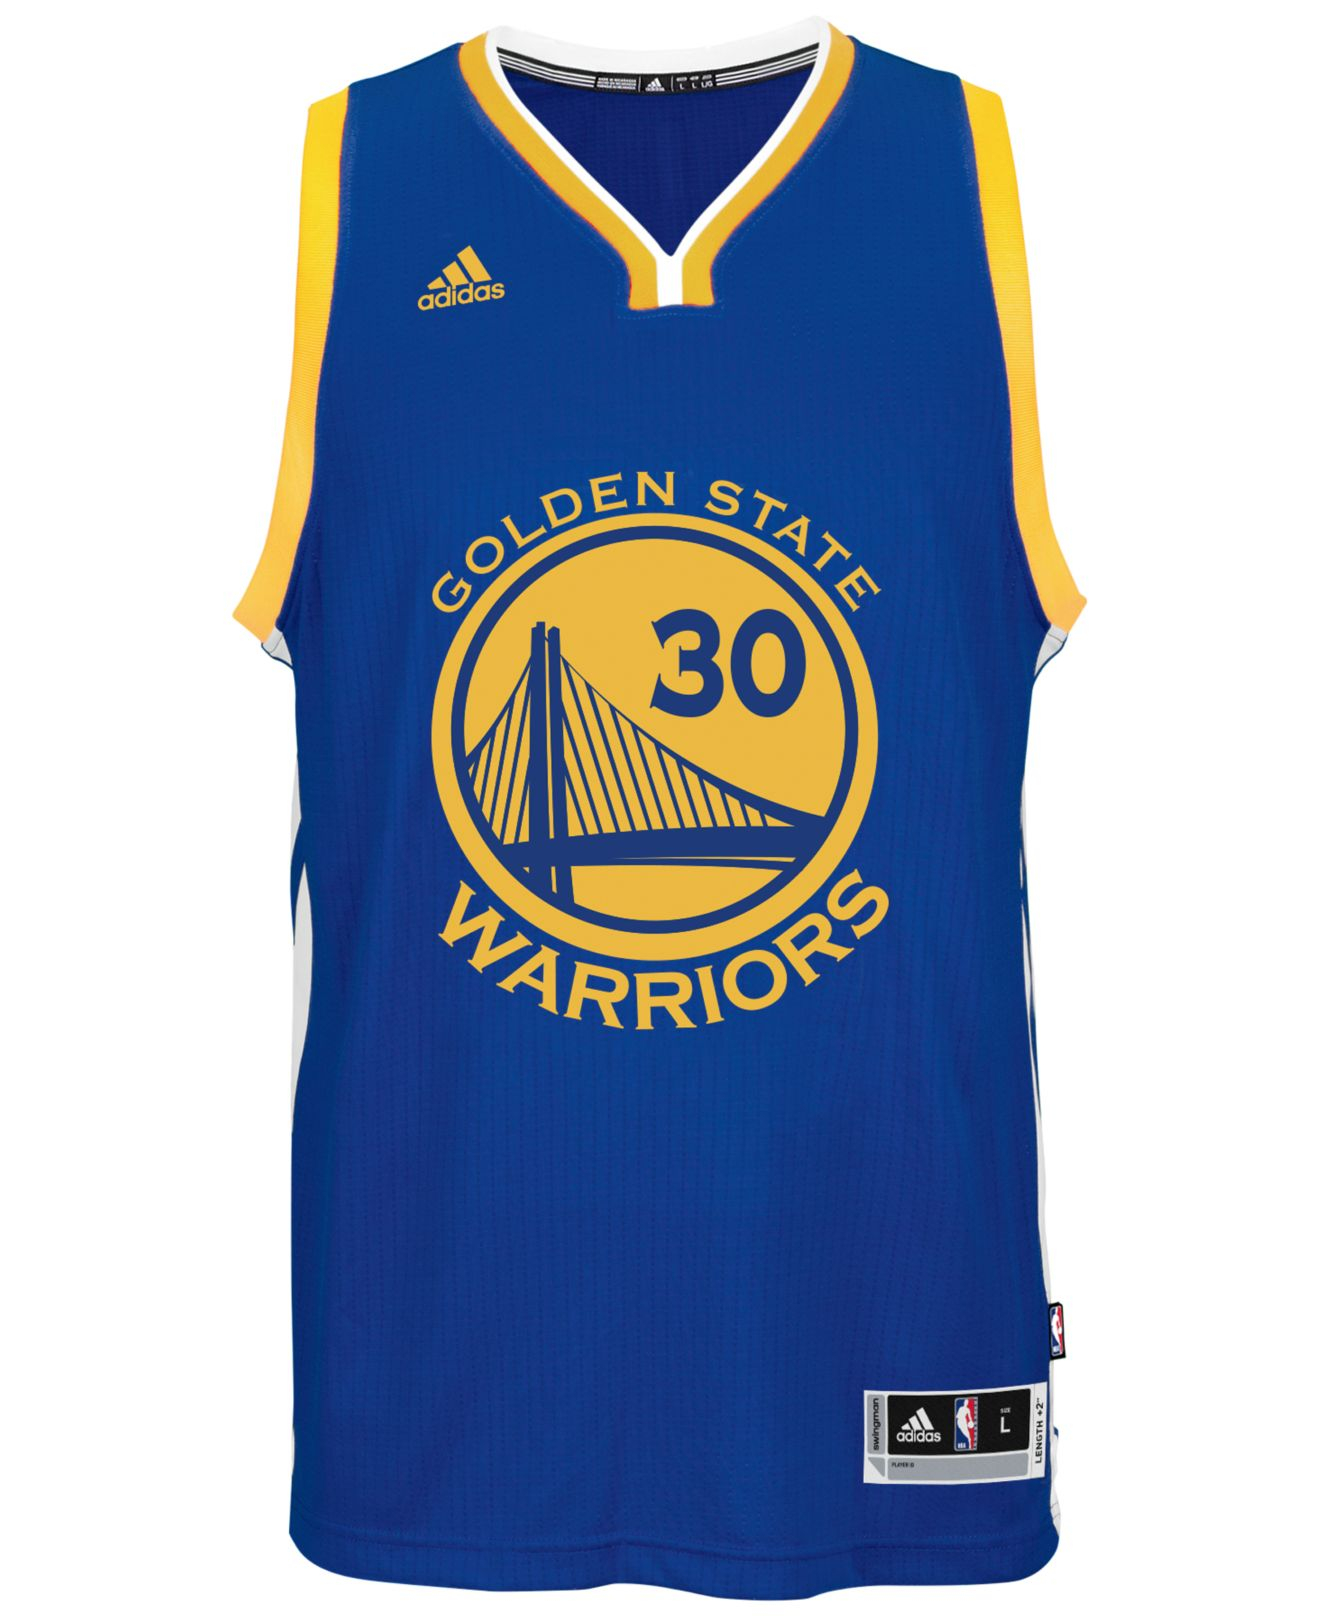 Adidas originals Men's Stephen Curry Golden State Warriors ...